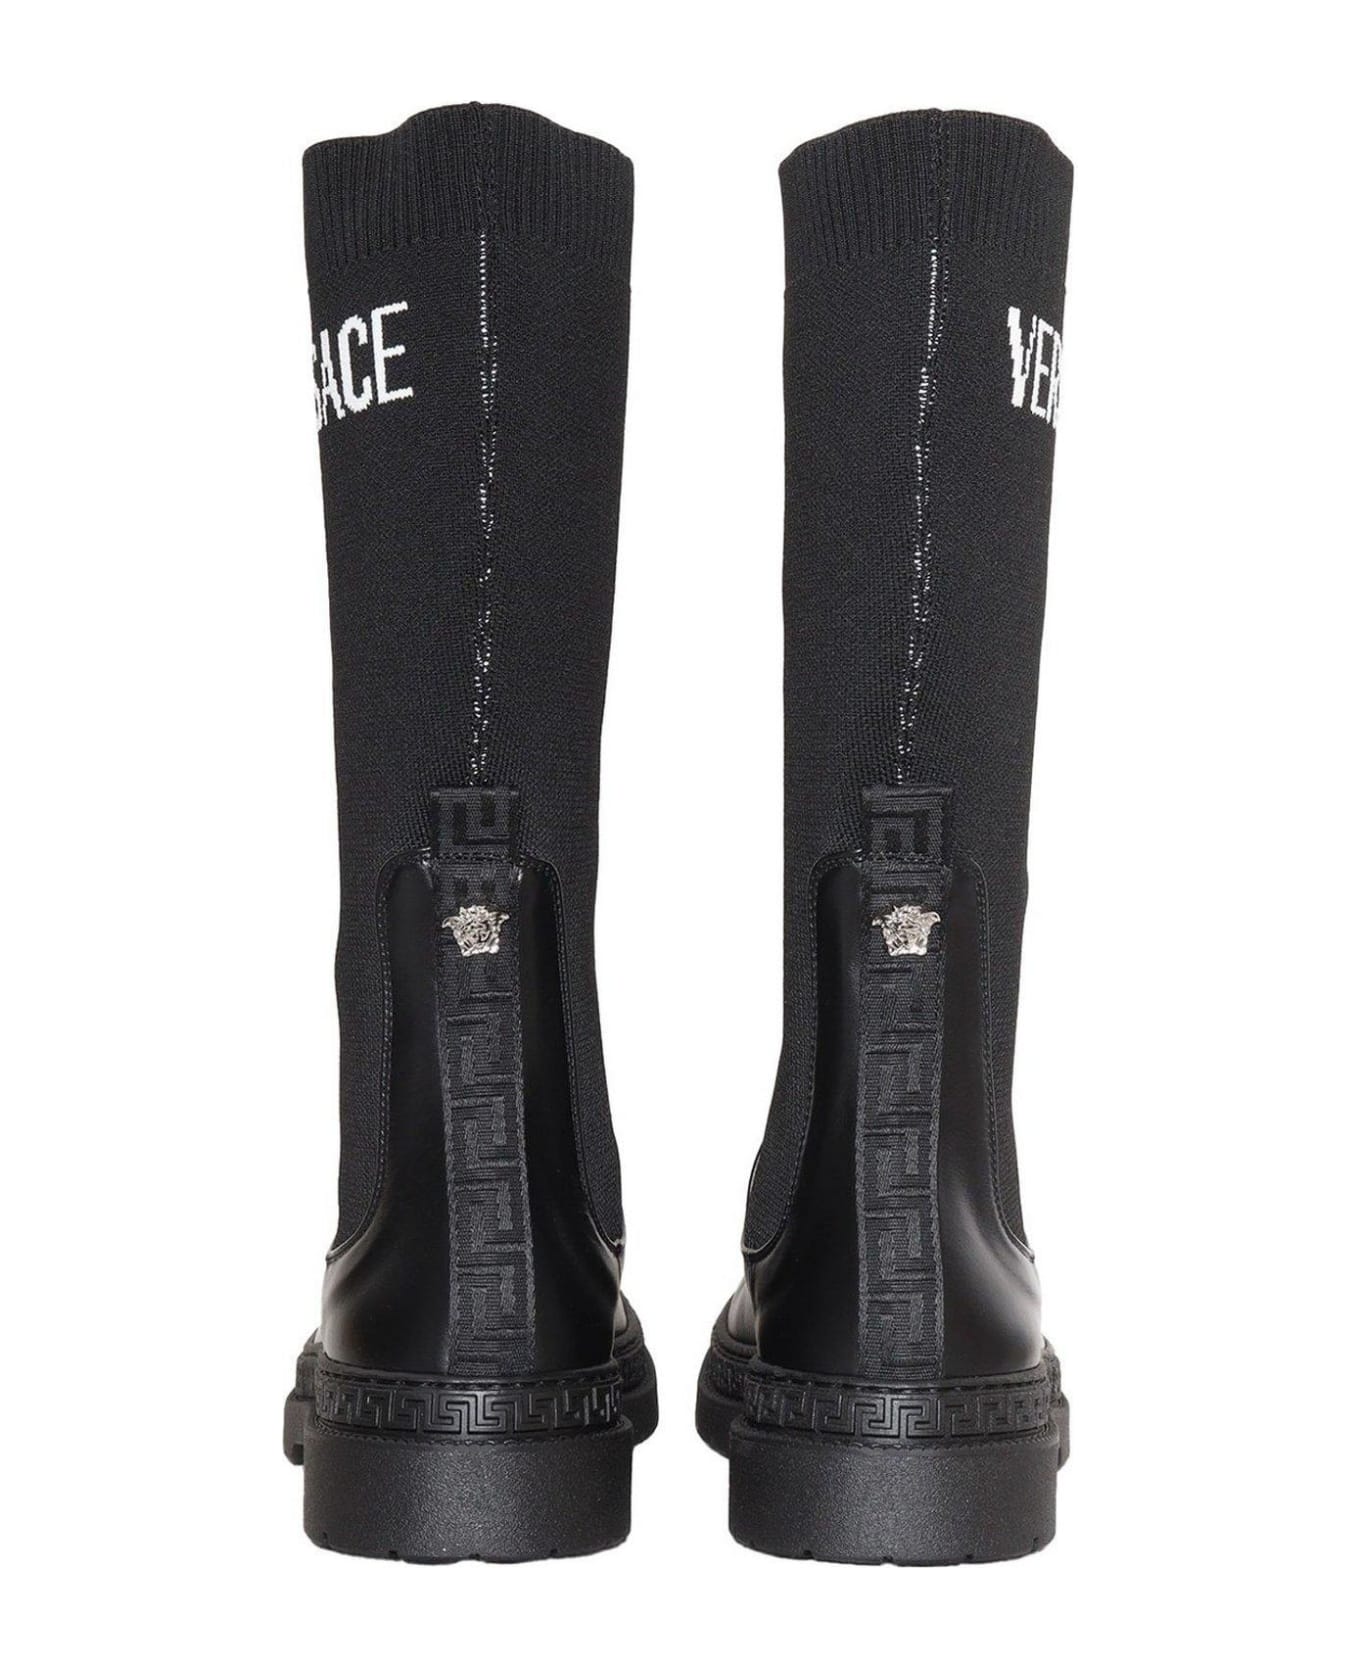 Versace Logo Intarsia Round Toe Boots - Nero